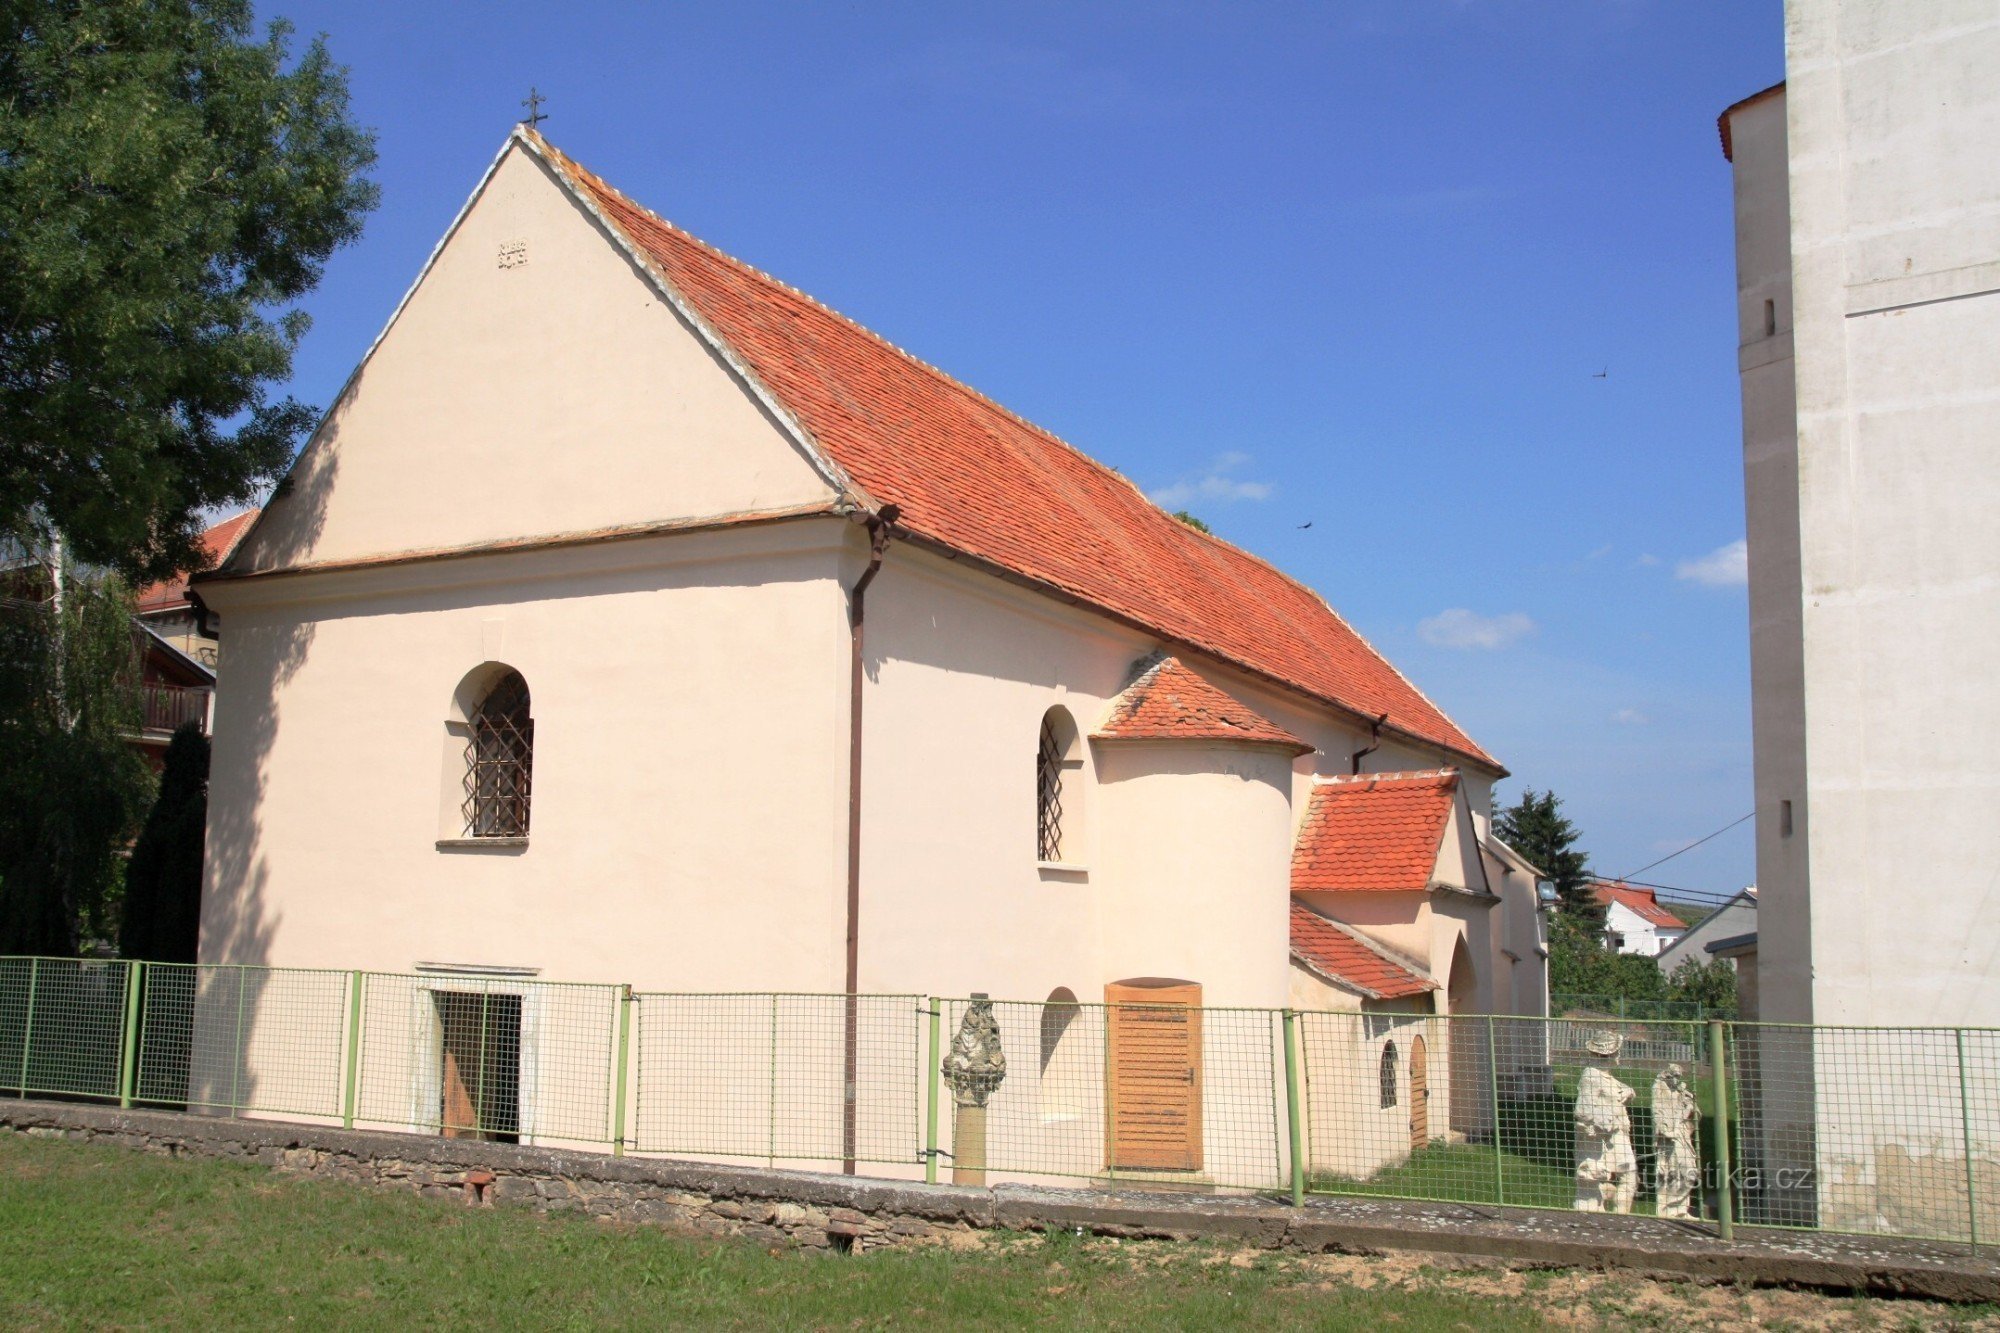 Přítluky - chiesa di S. Mercati da ovest